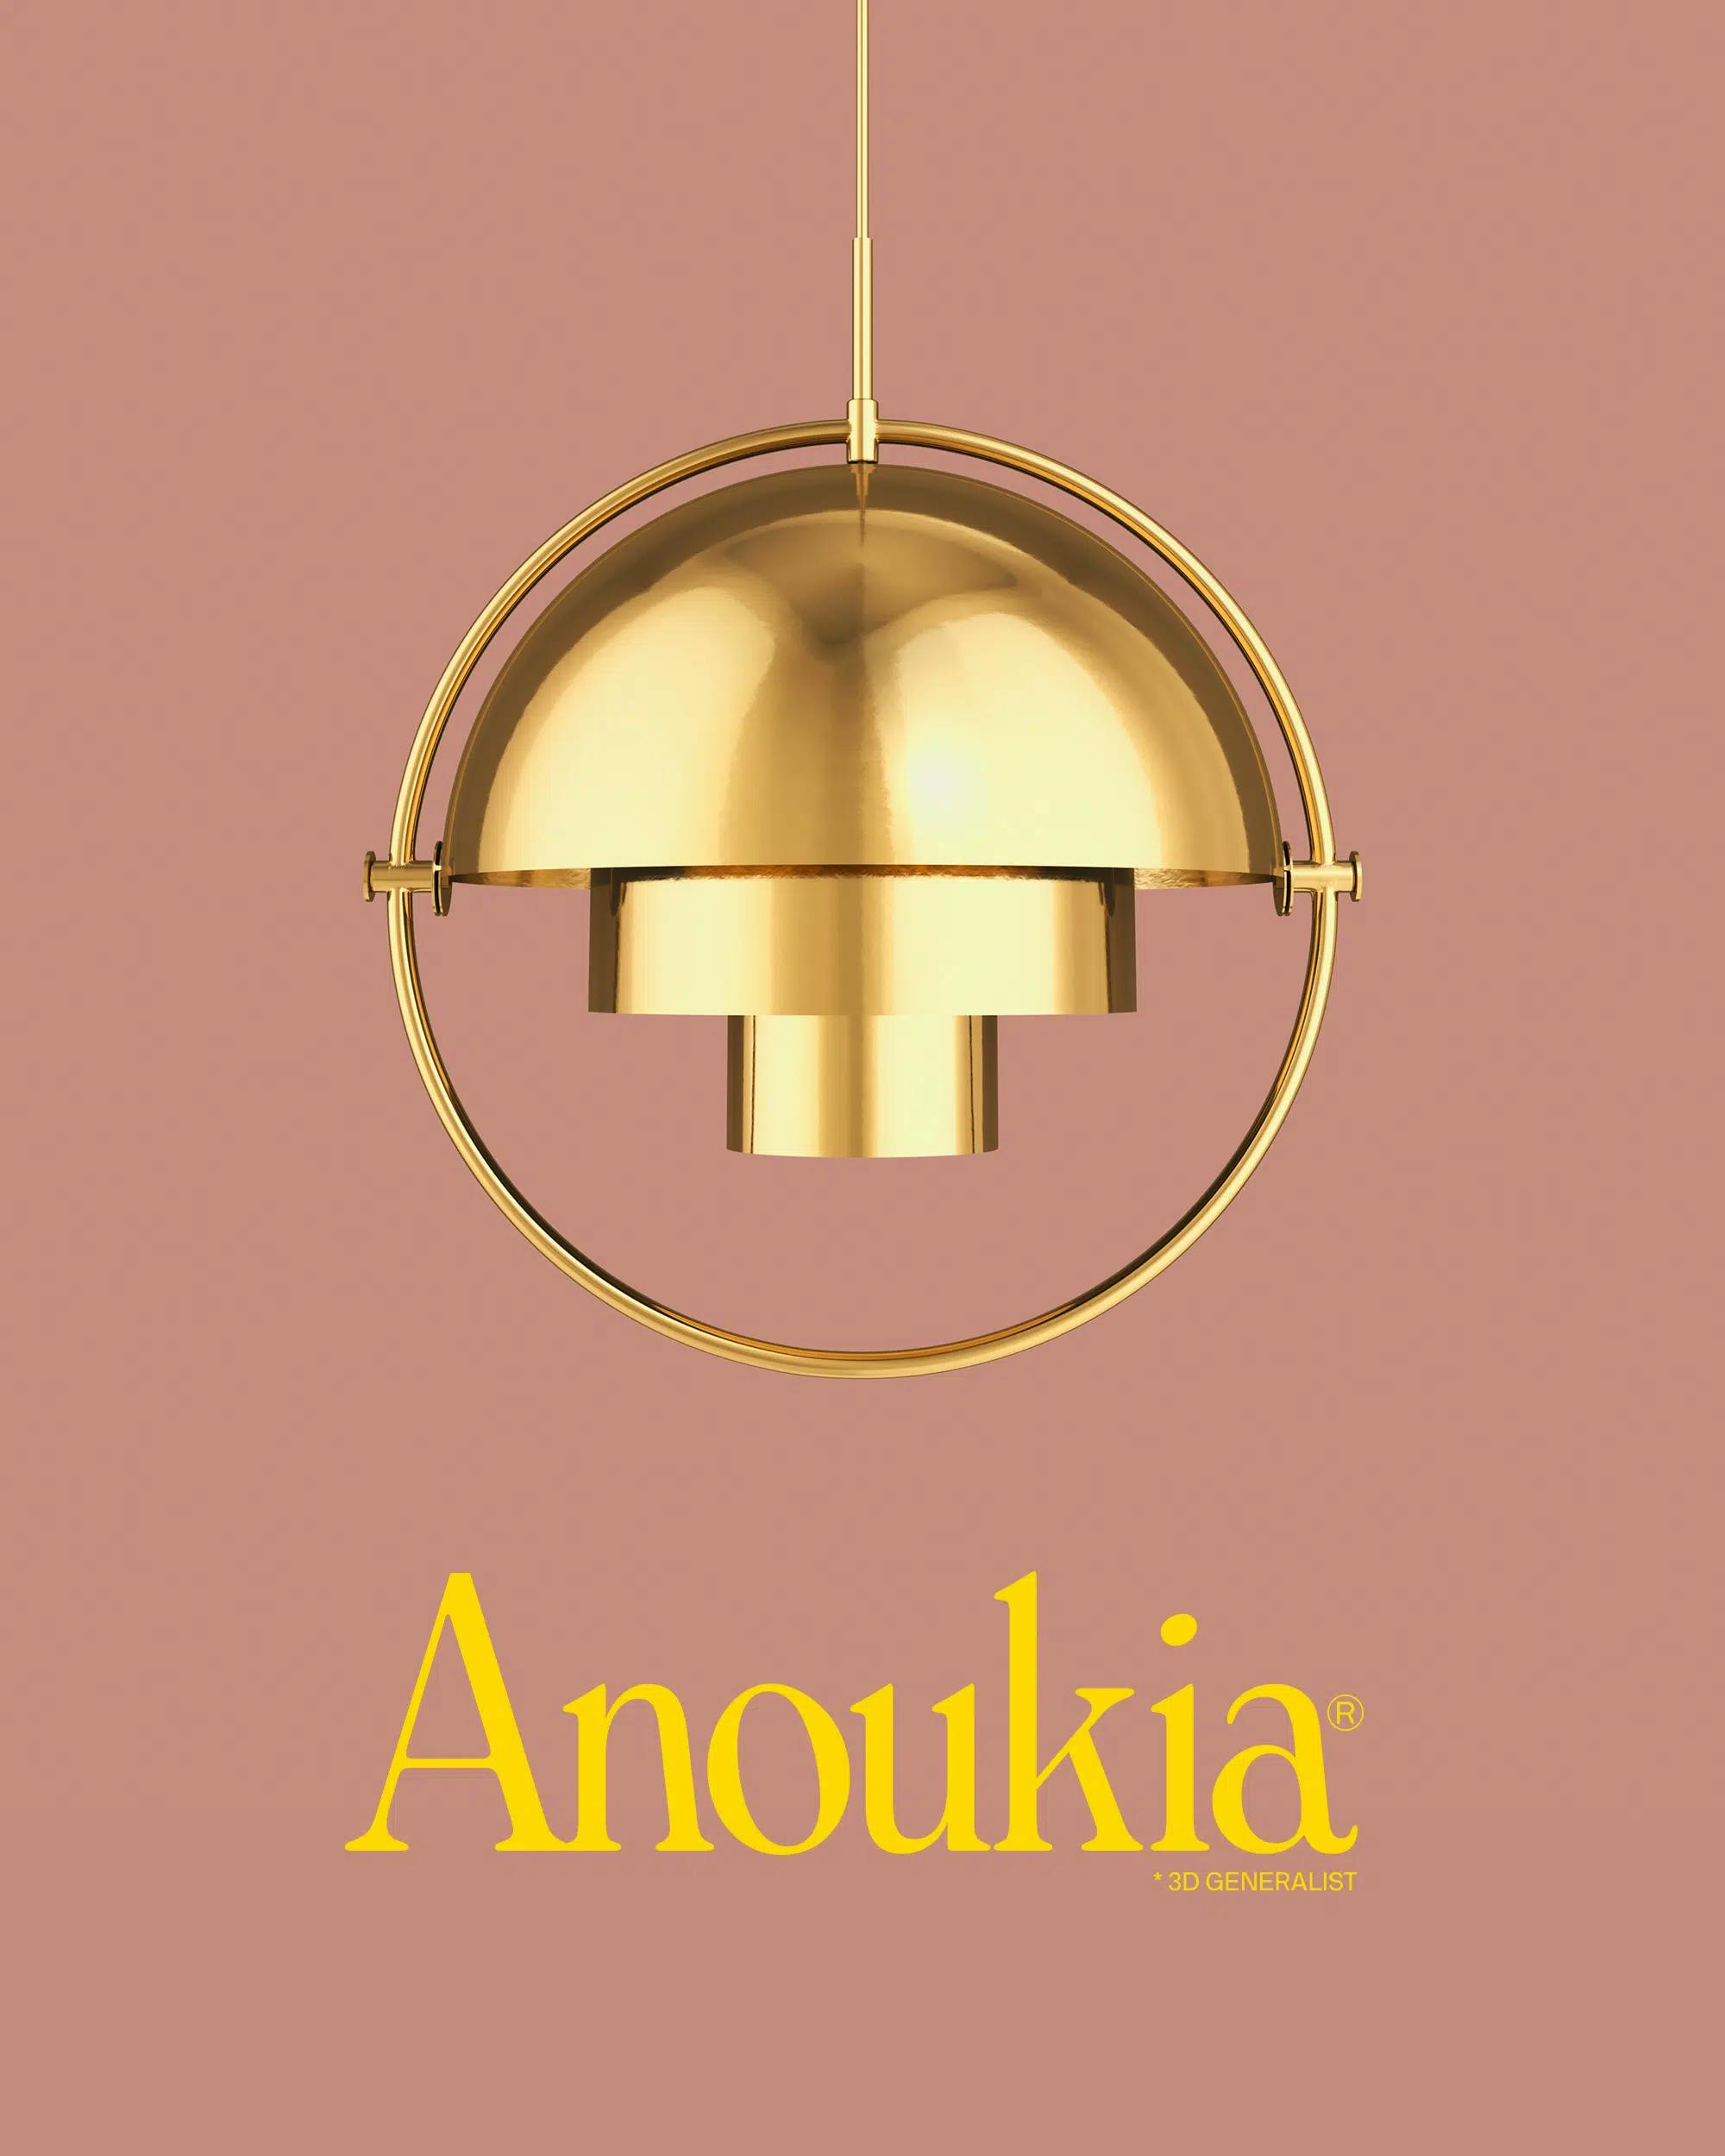 Anoukia / Branding Program, Web